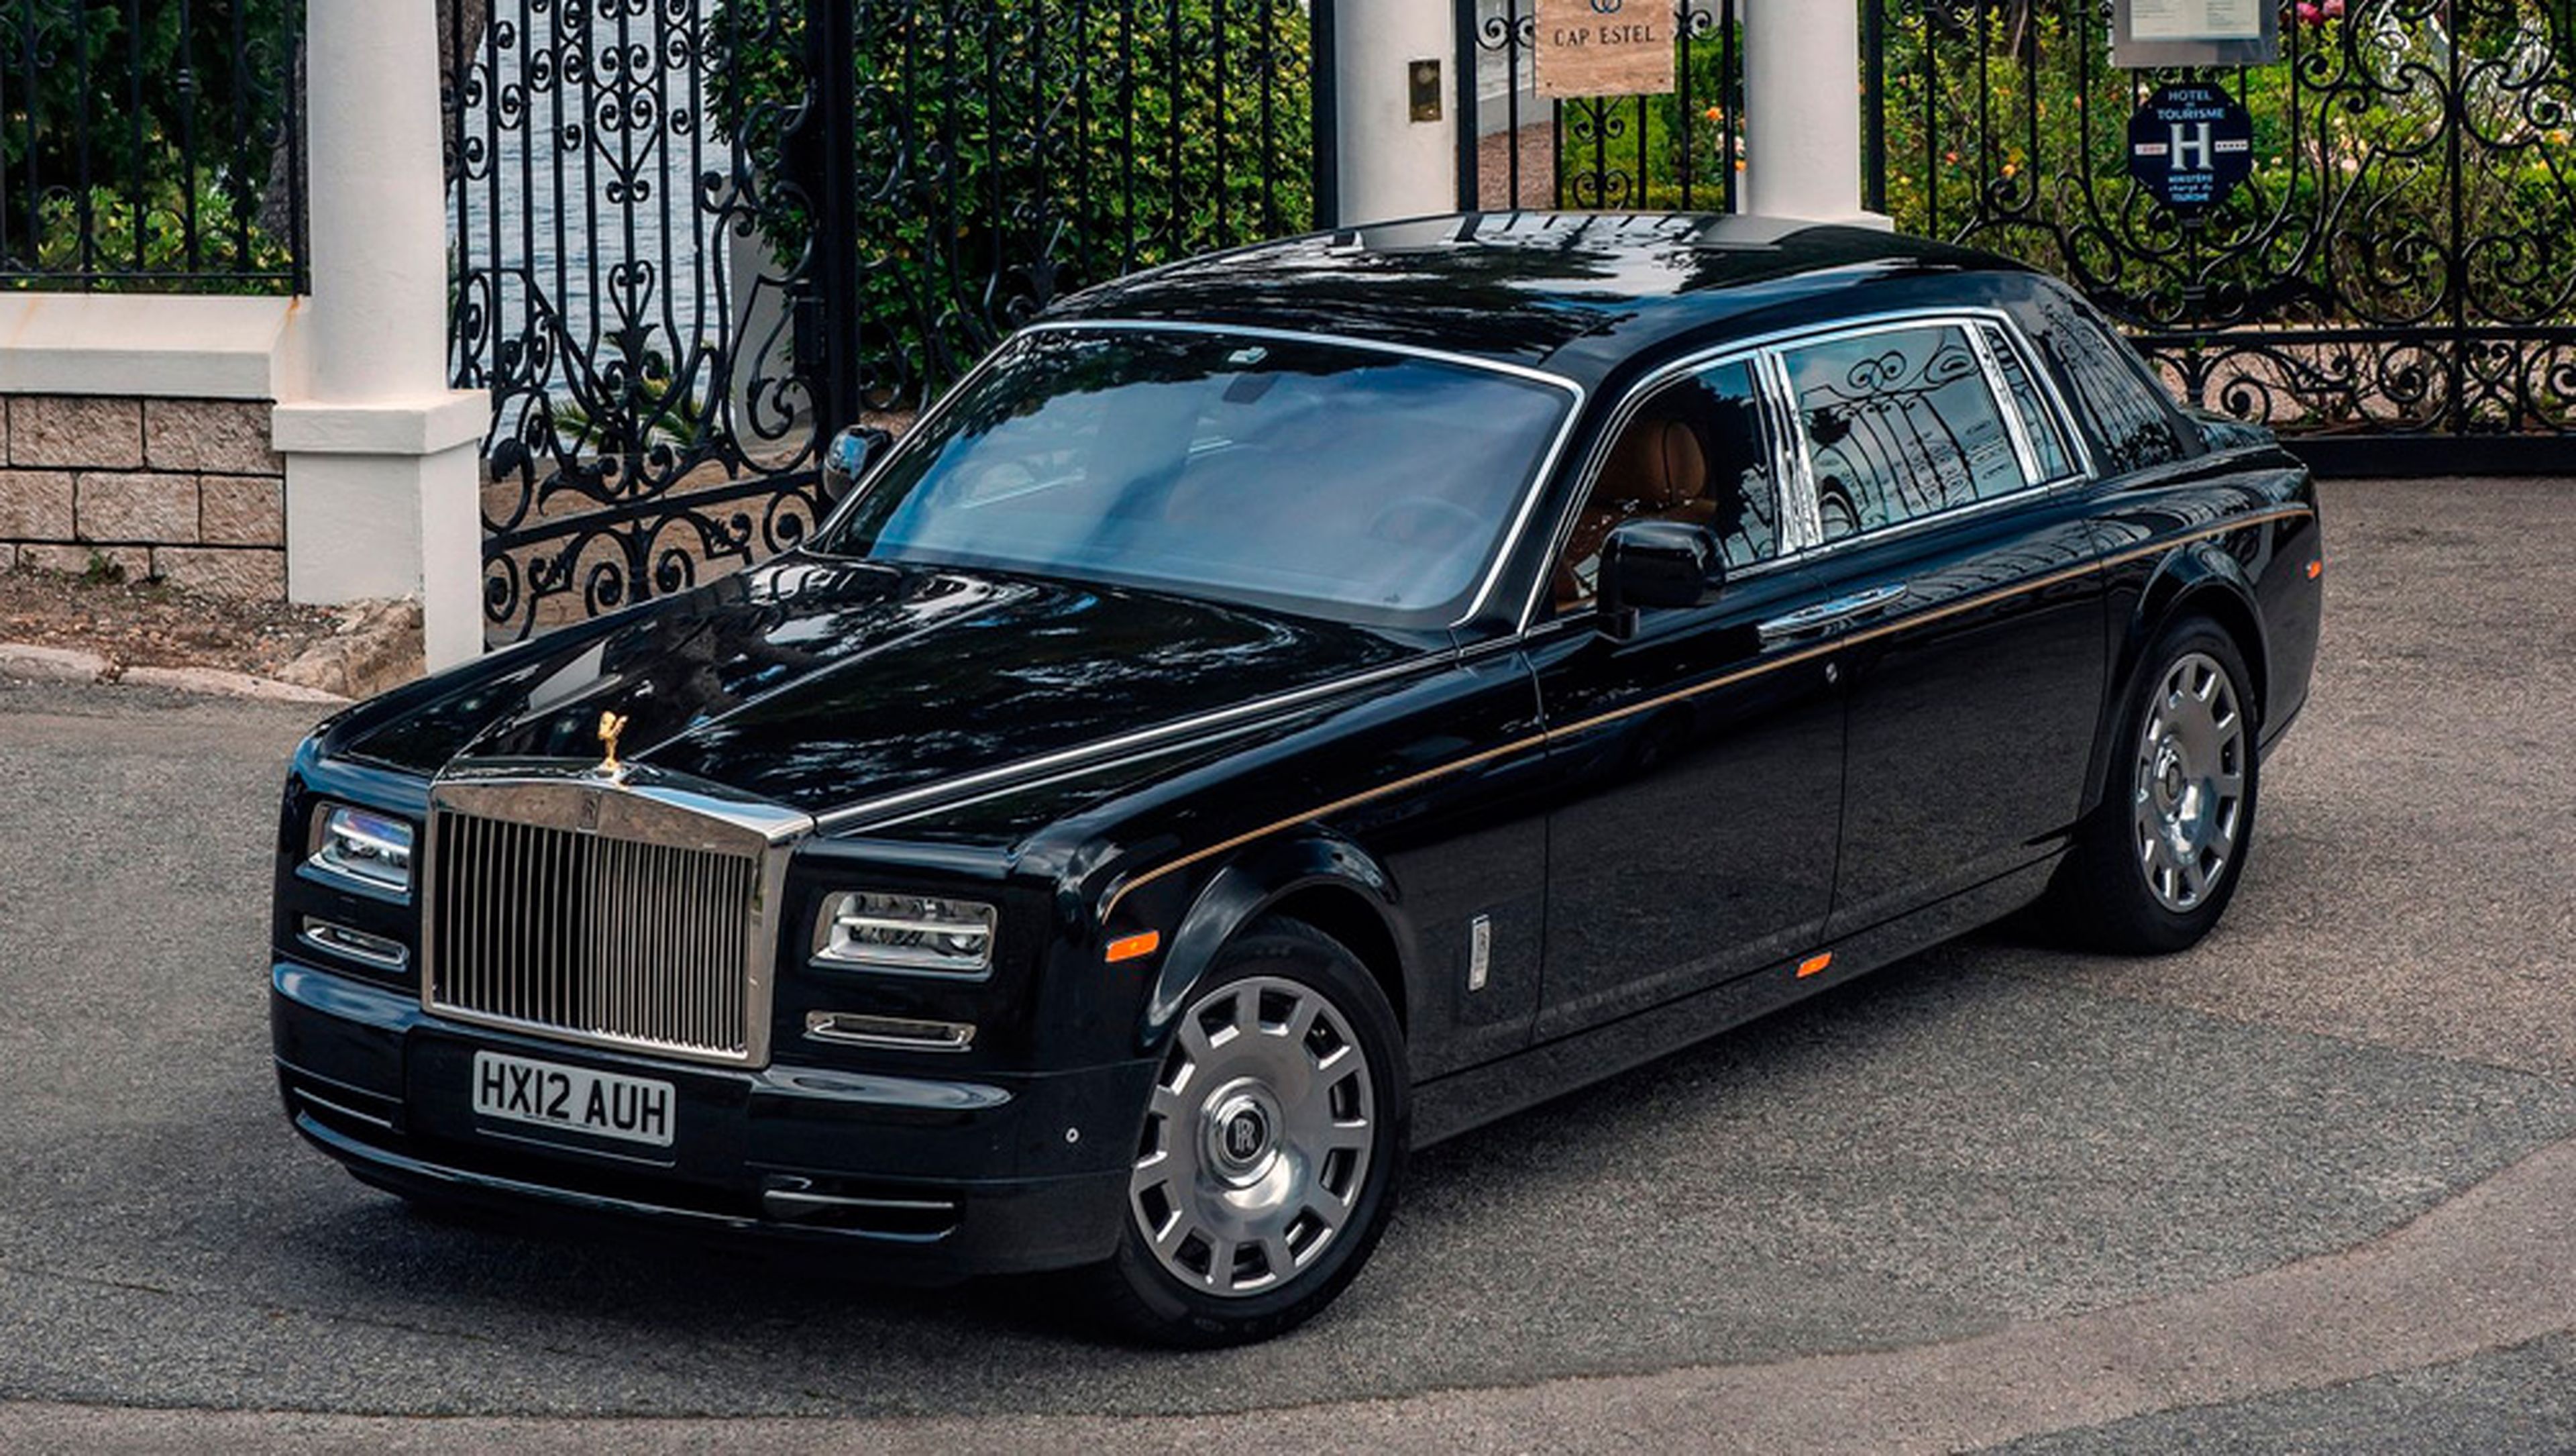 Rolls-Royce Phantom VII